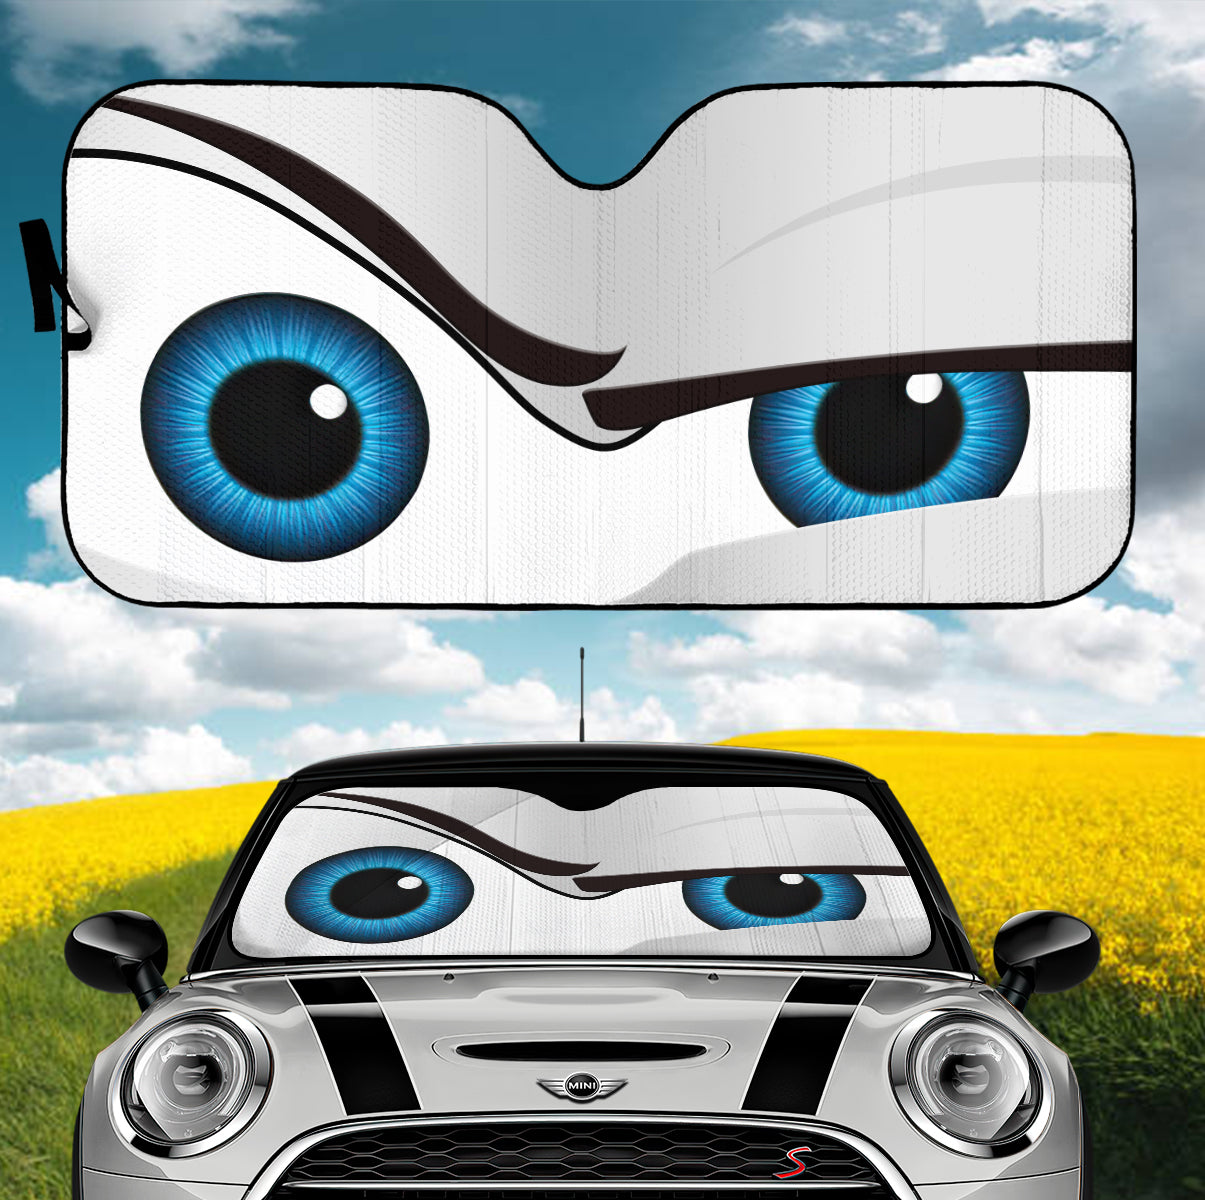 Funny White The Rock Style Cartoon Eye Car Auto Sunshades